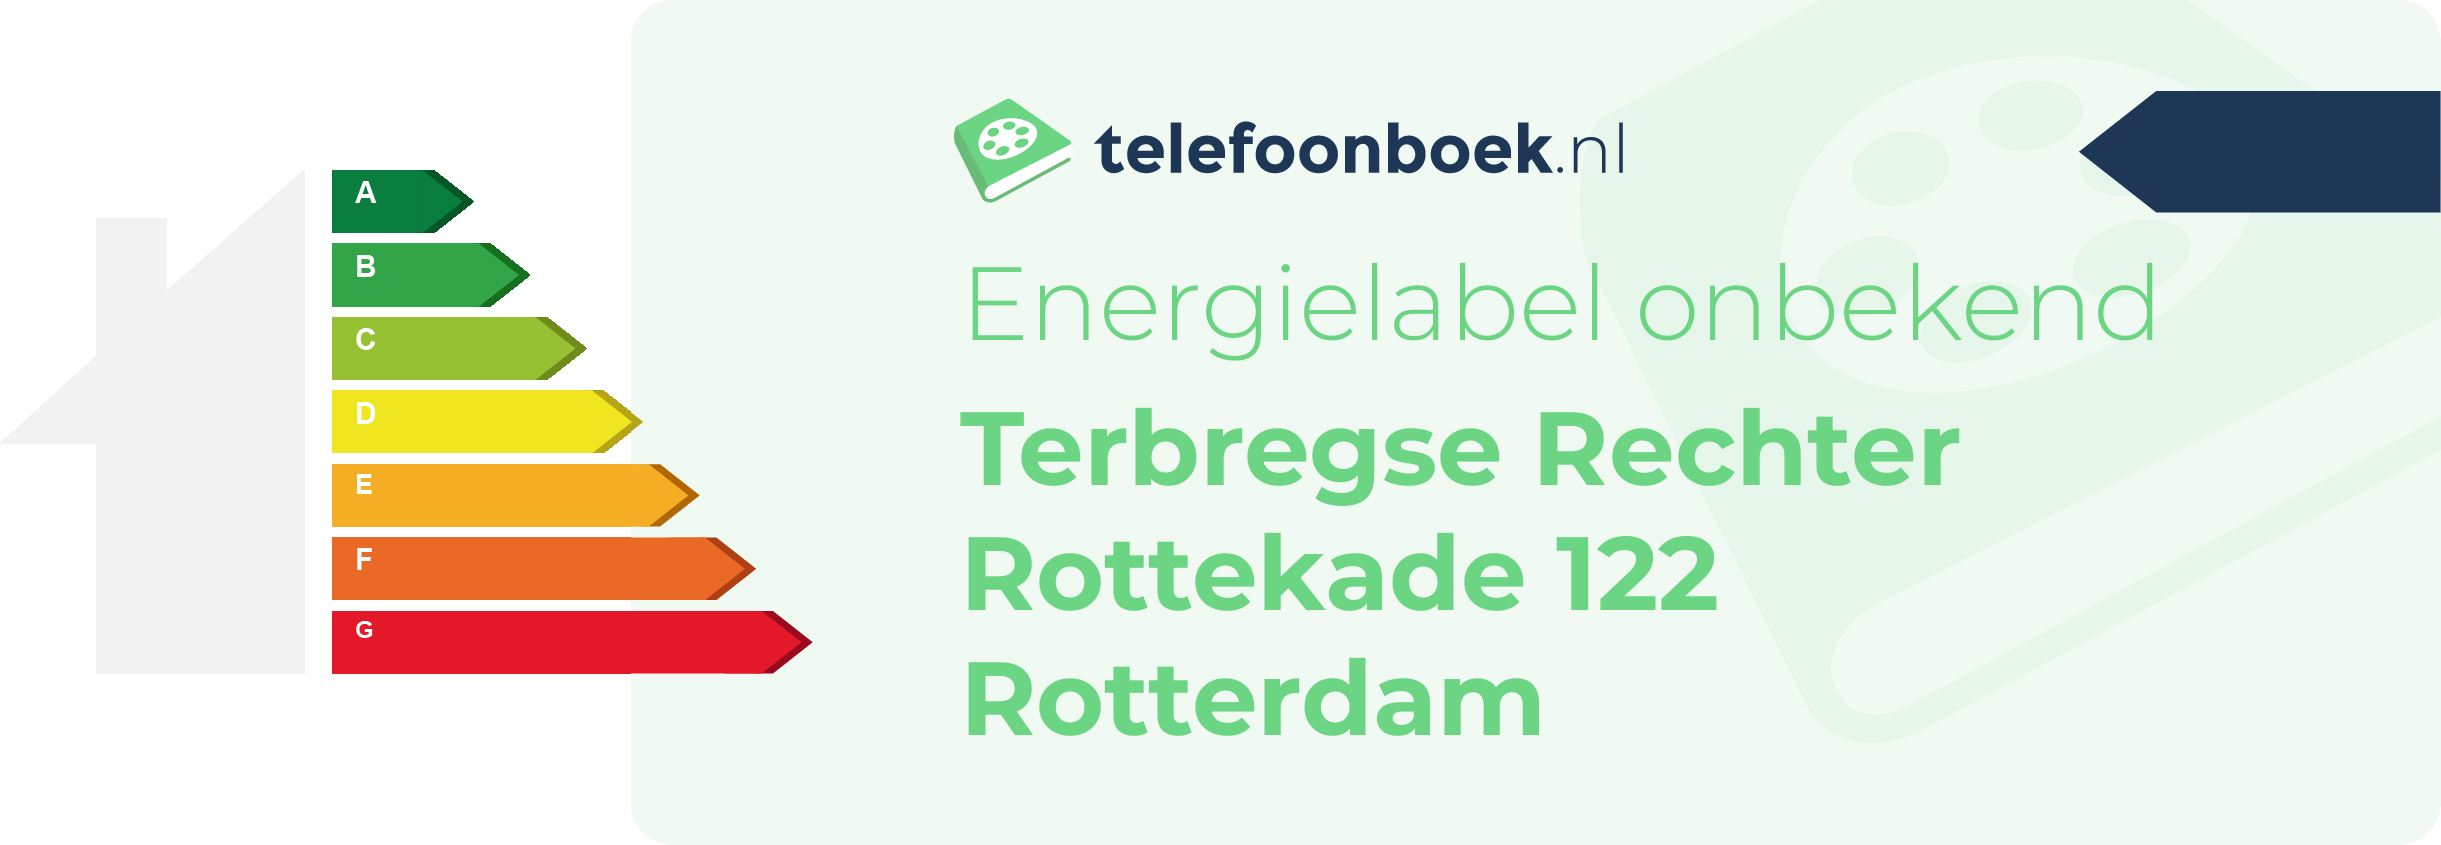 Energielabel Terbregse Rechter Rottekade 122 Rotterdam